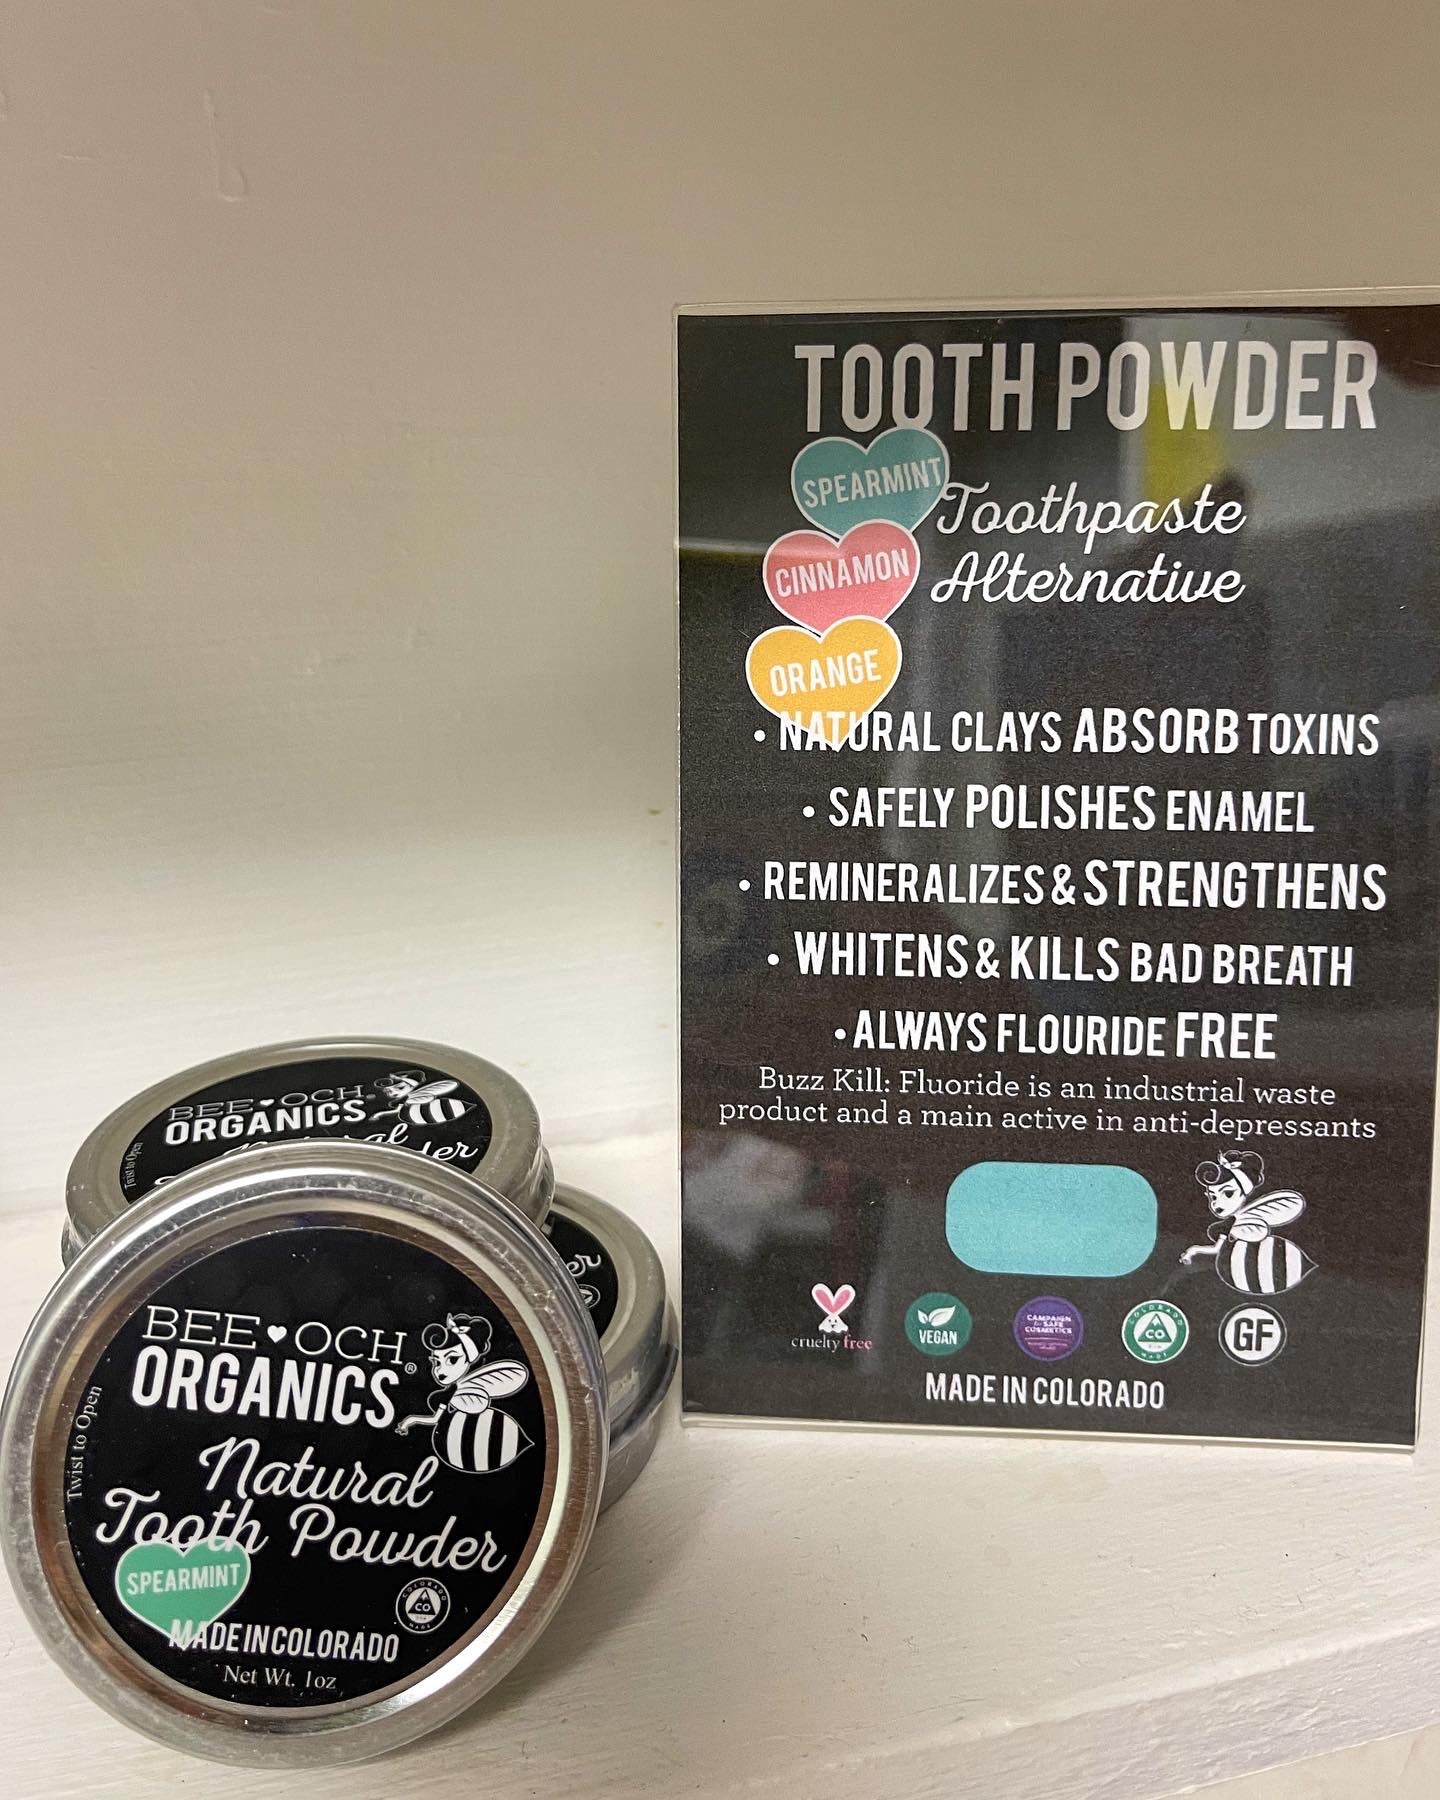 BEE-OCH Organics Natural Tooth Powder - oh-eco